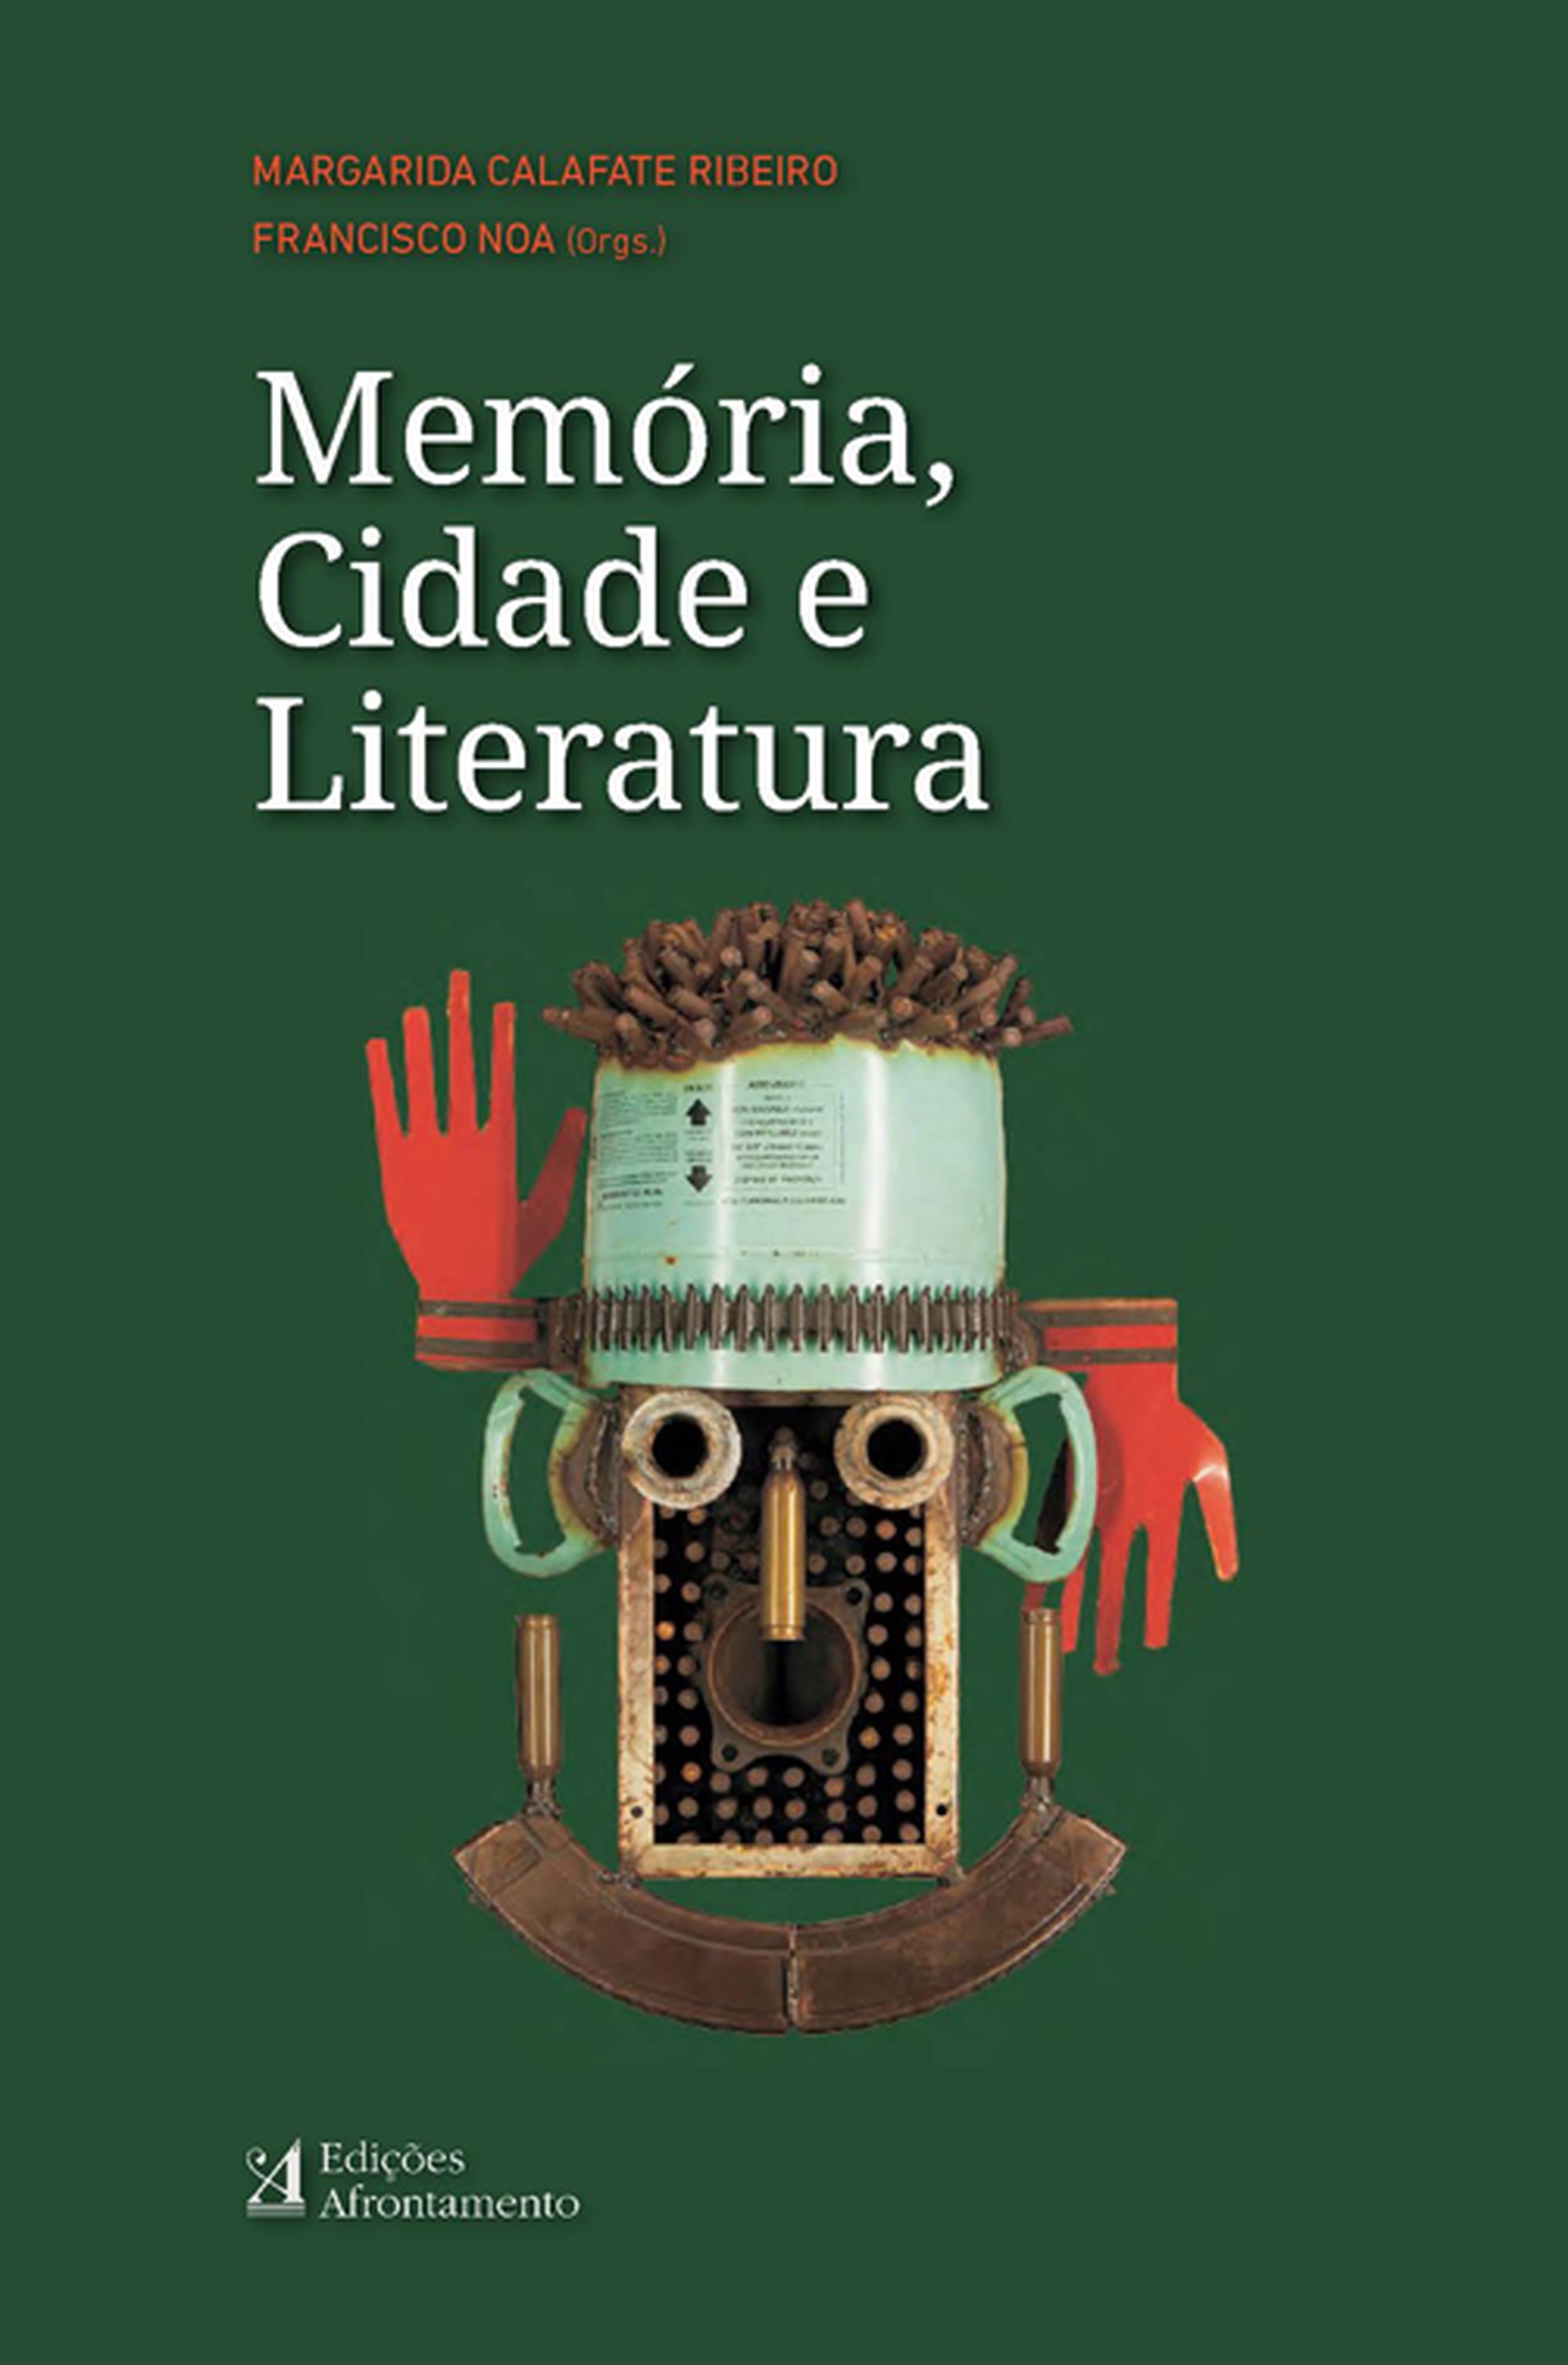 Memória, Cidade e Literatura (2019), Margarida Calafate Ribeiro e Francisco Noa